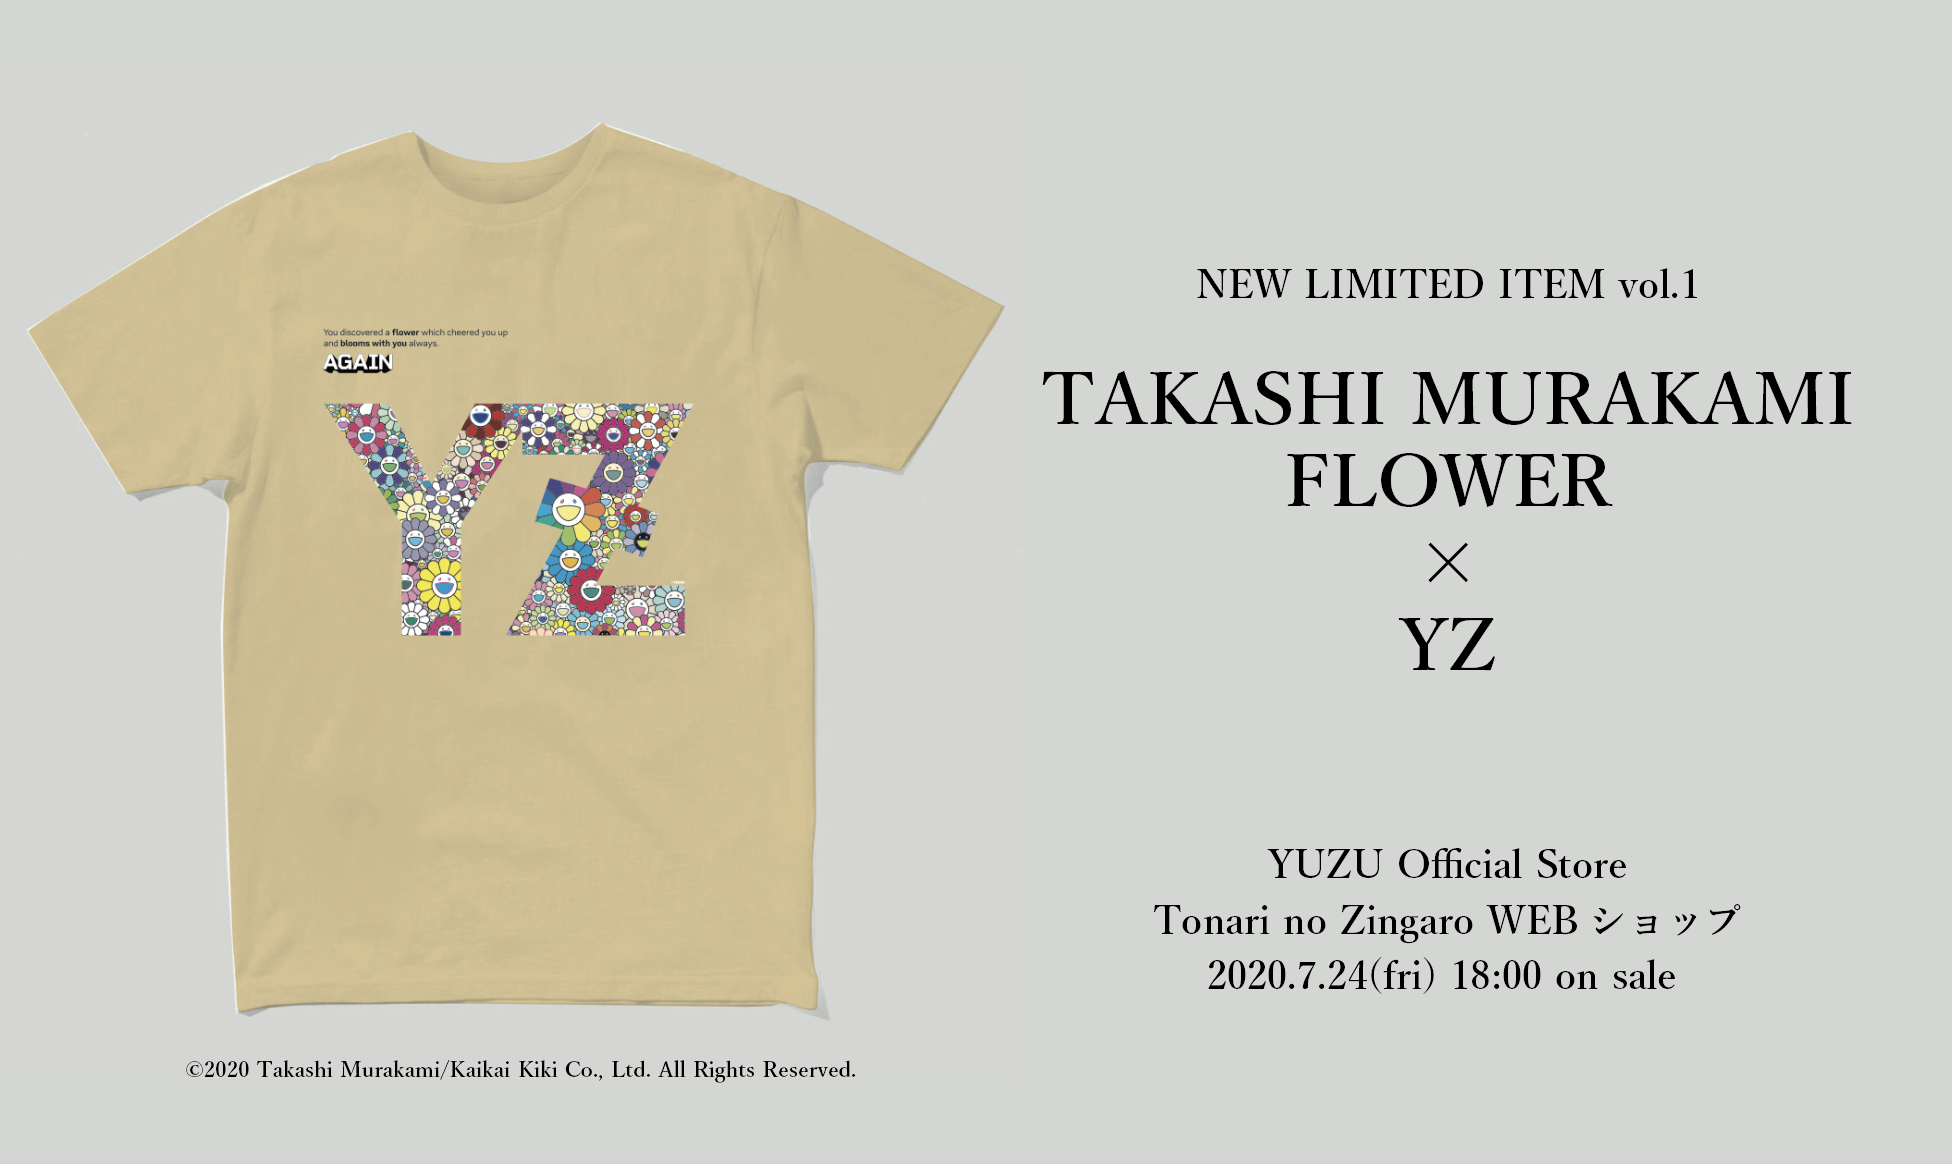 TAKASHI MURAKAMI FLOWER × YZ Tシャツ 村上隆 ゆず - Tシャツ ...